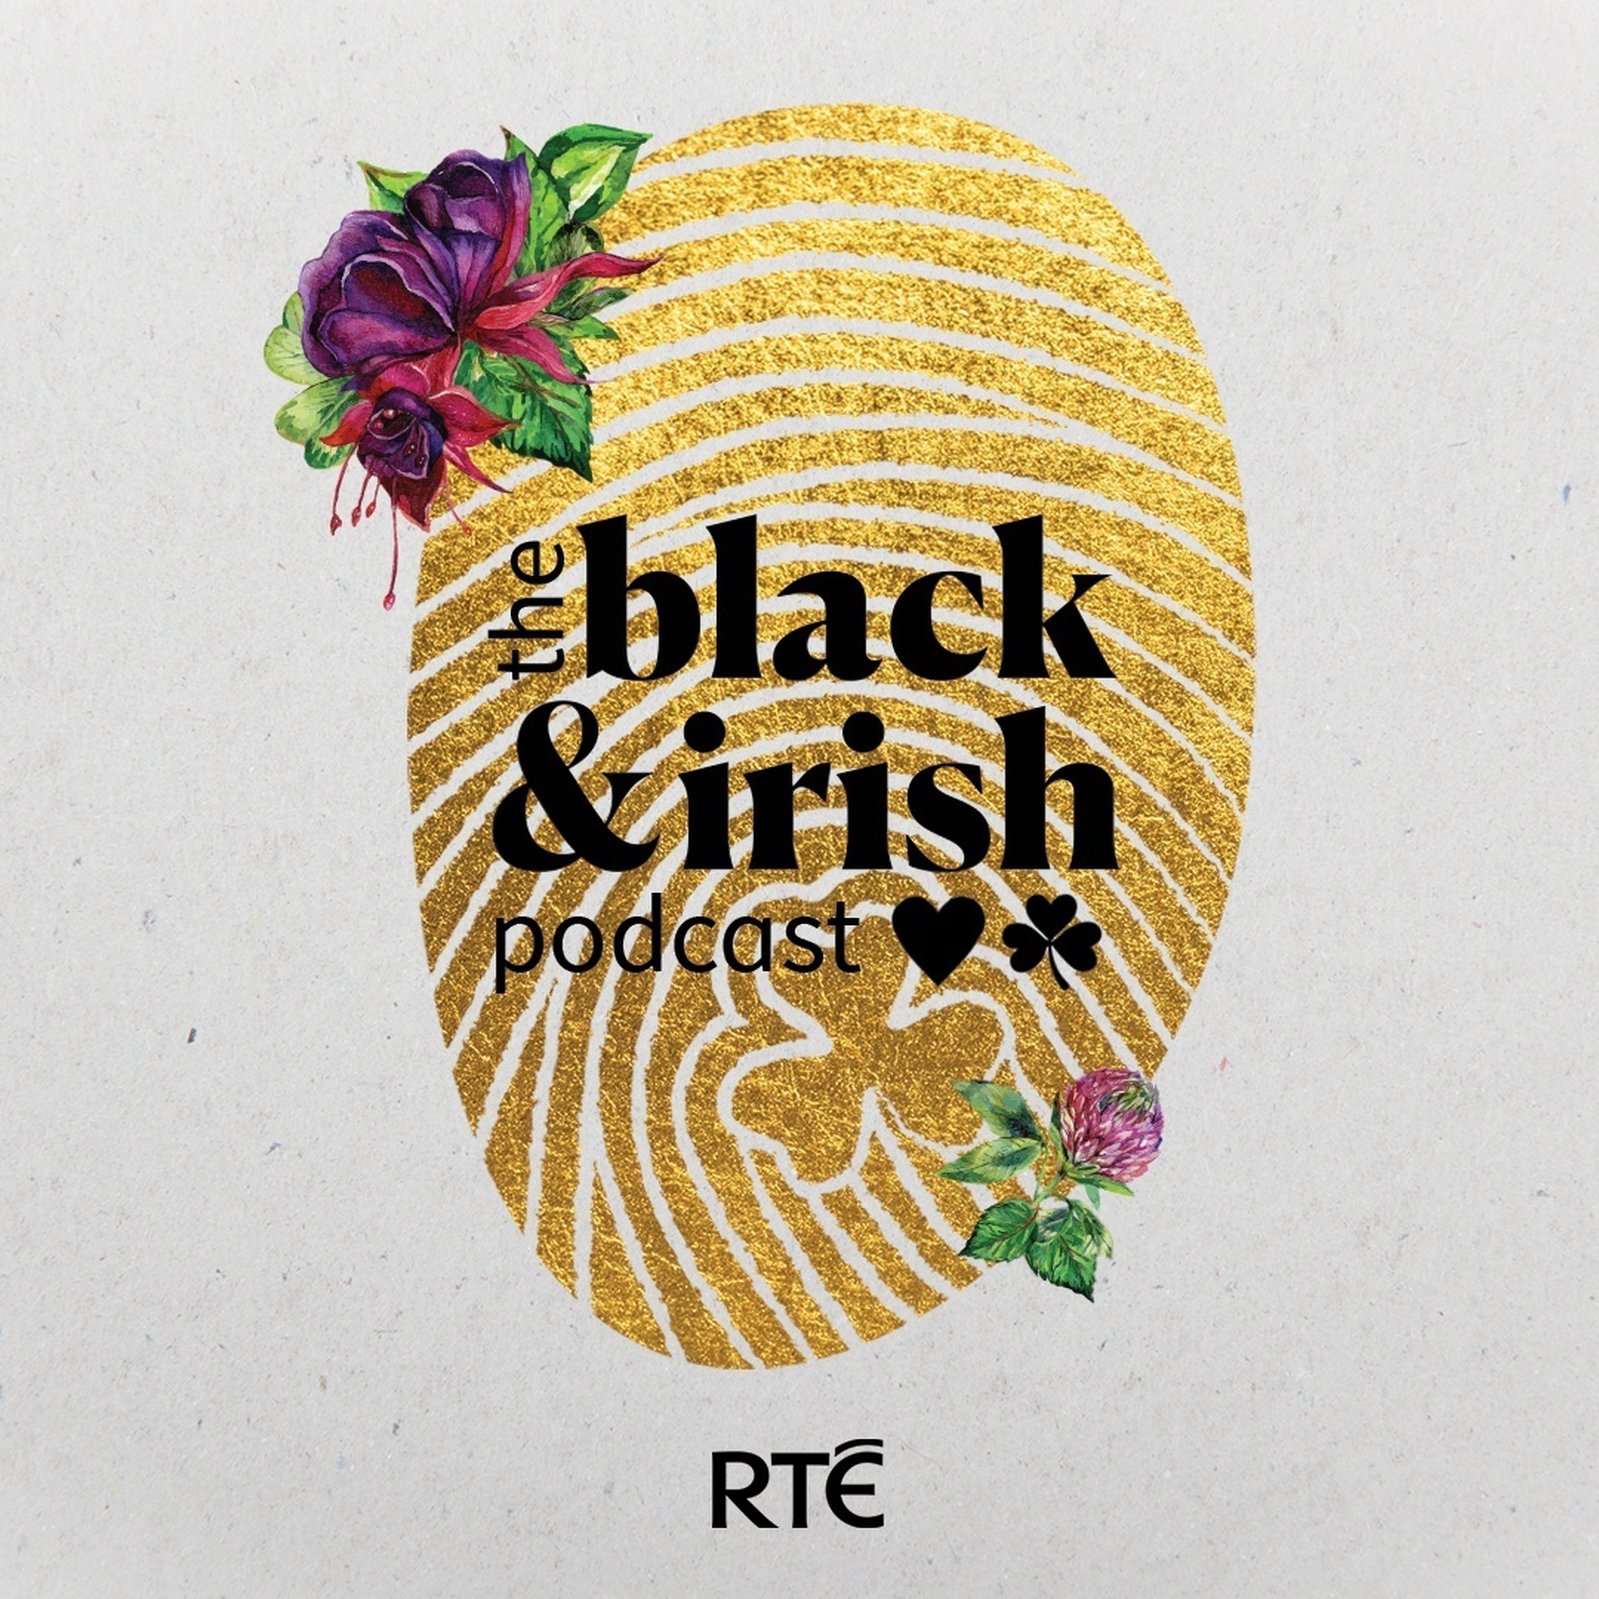 The Black and Irish Podcast podcast show image